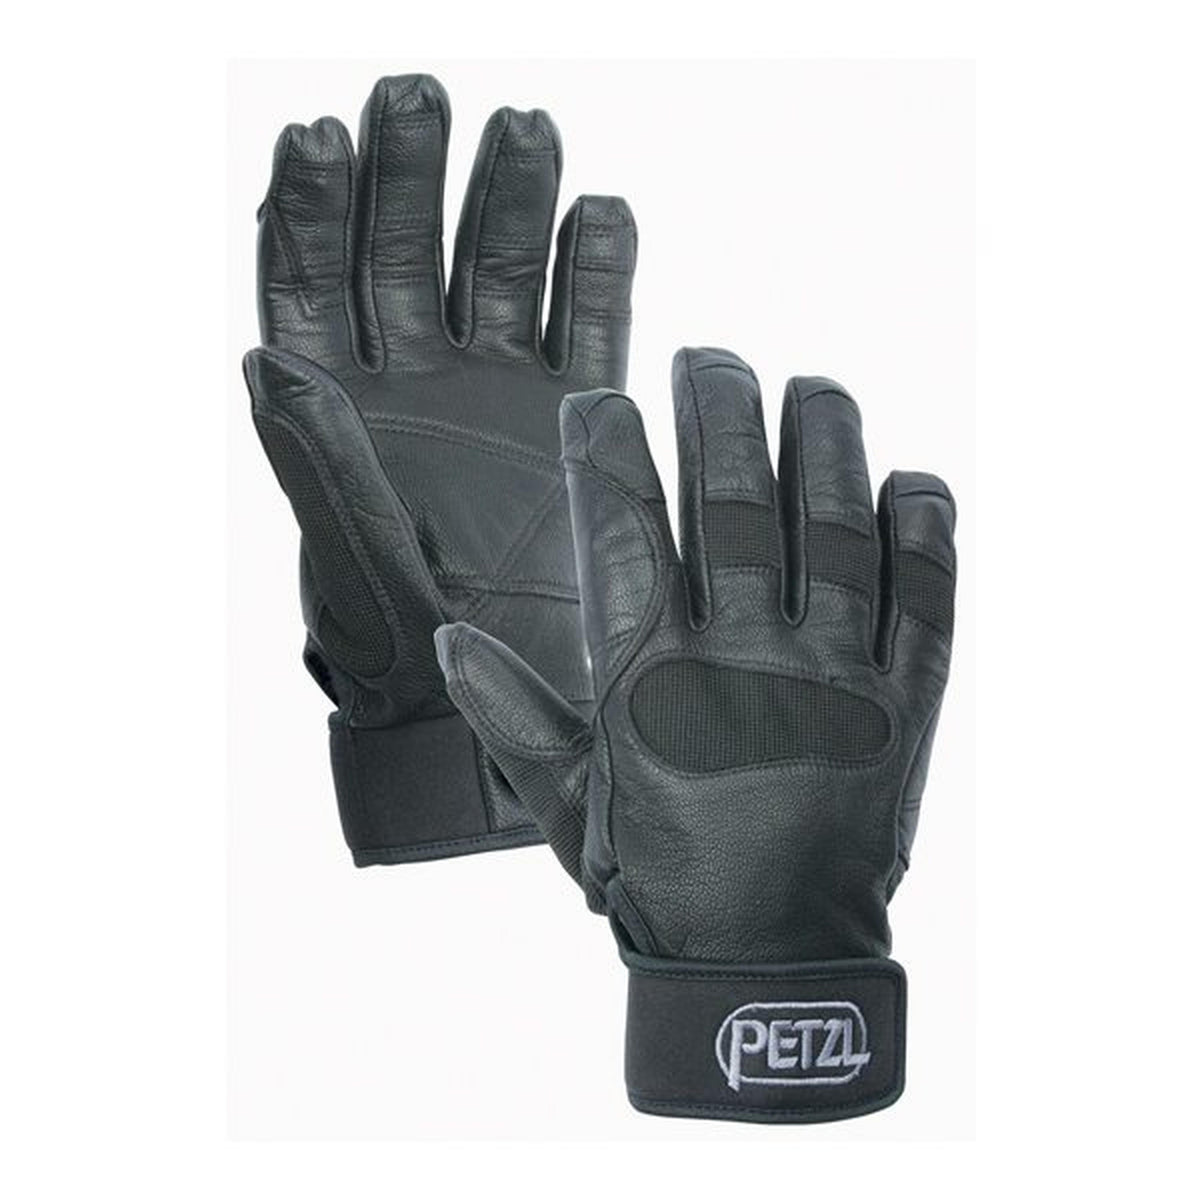 PETZL CORDEX PLUS (Belay-rappel gloves) – Atlas Devices